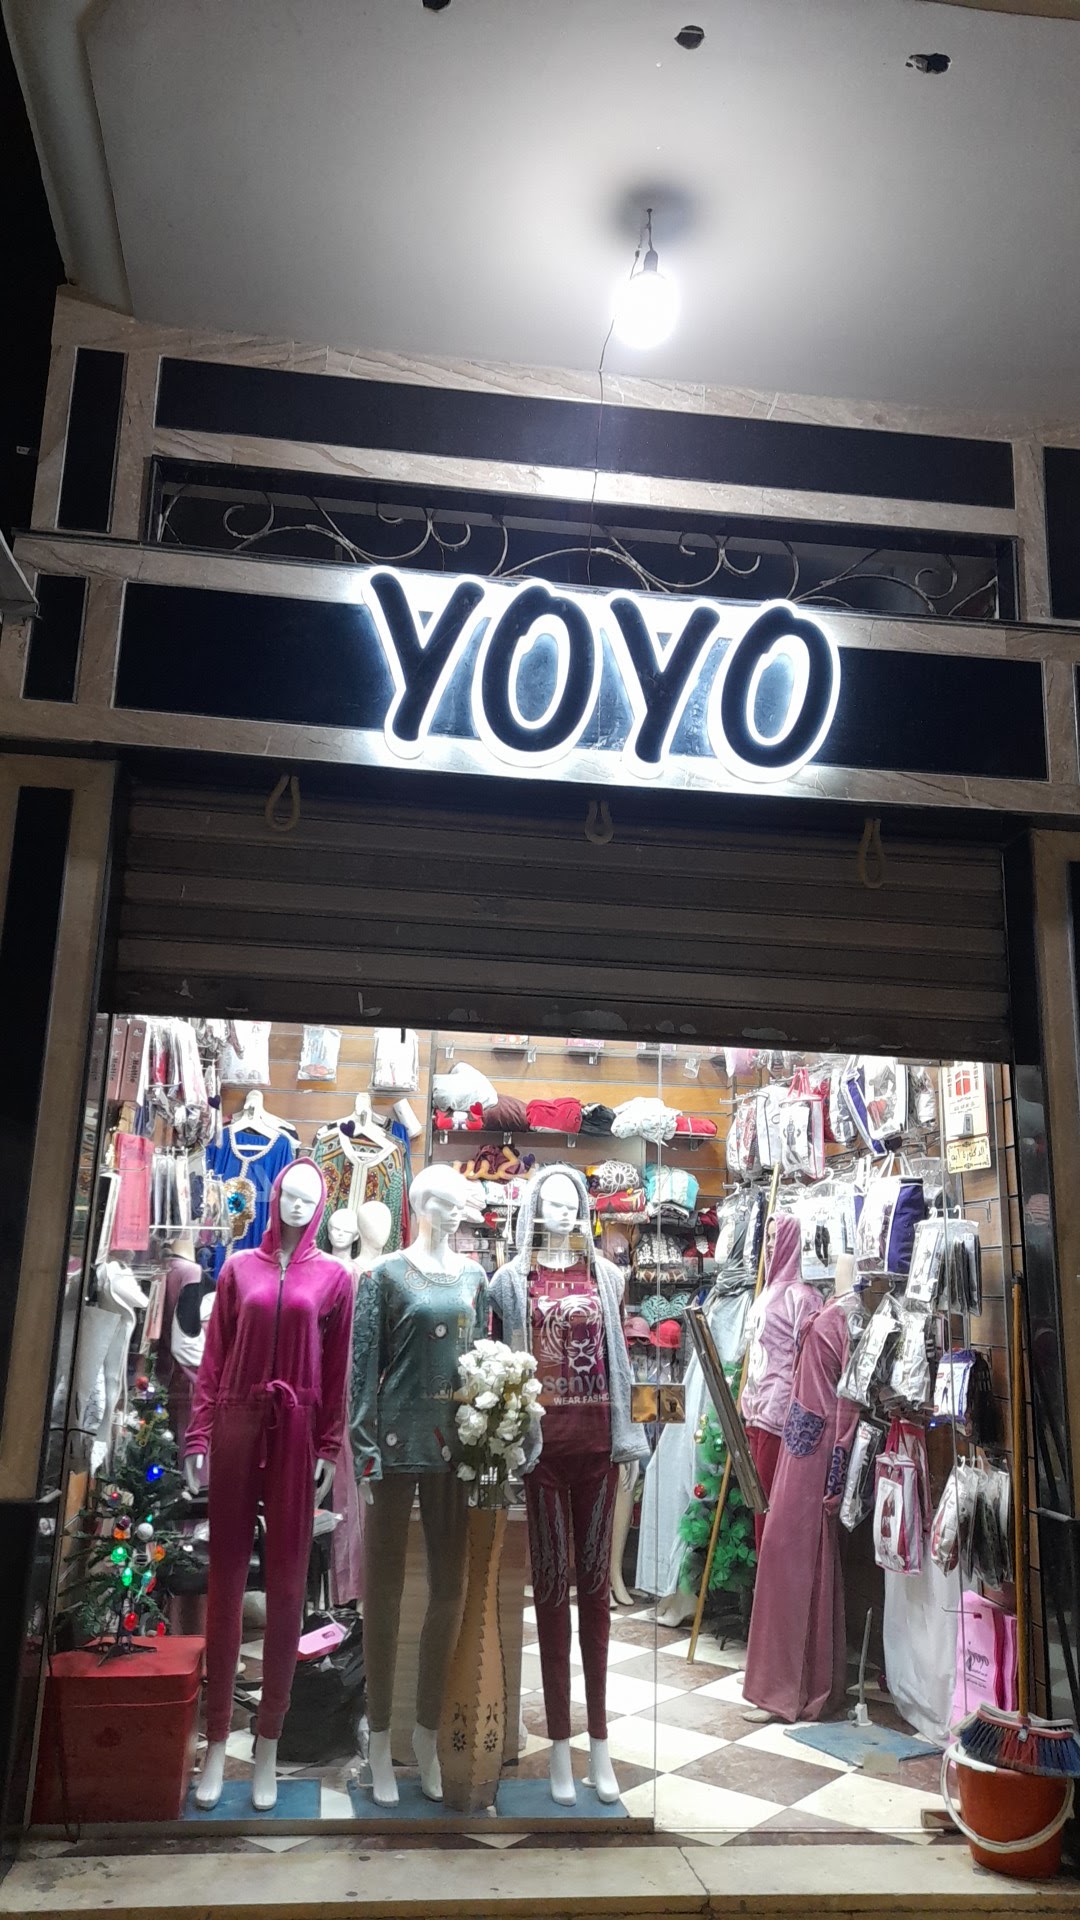 Yoyo lingerie